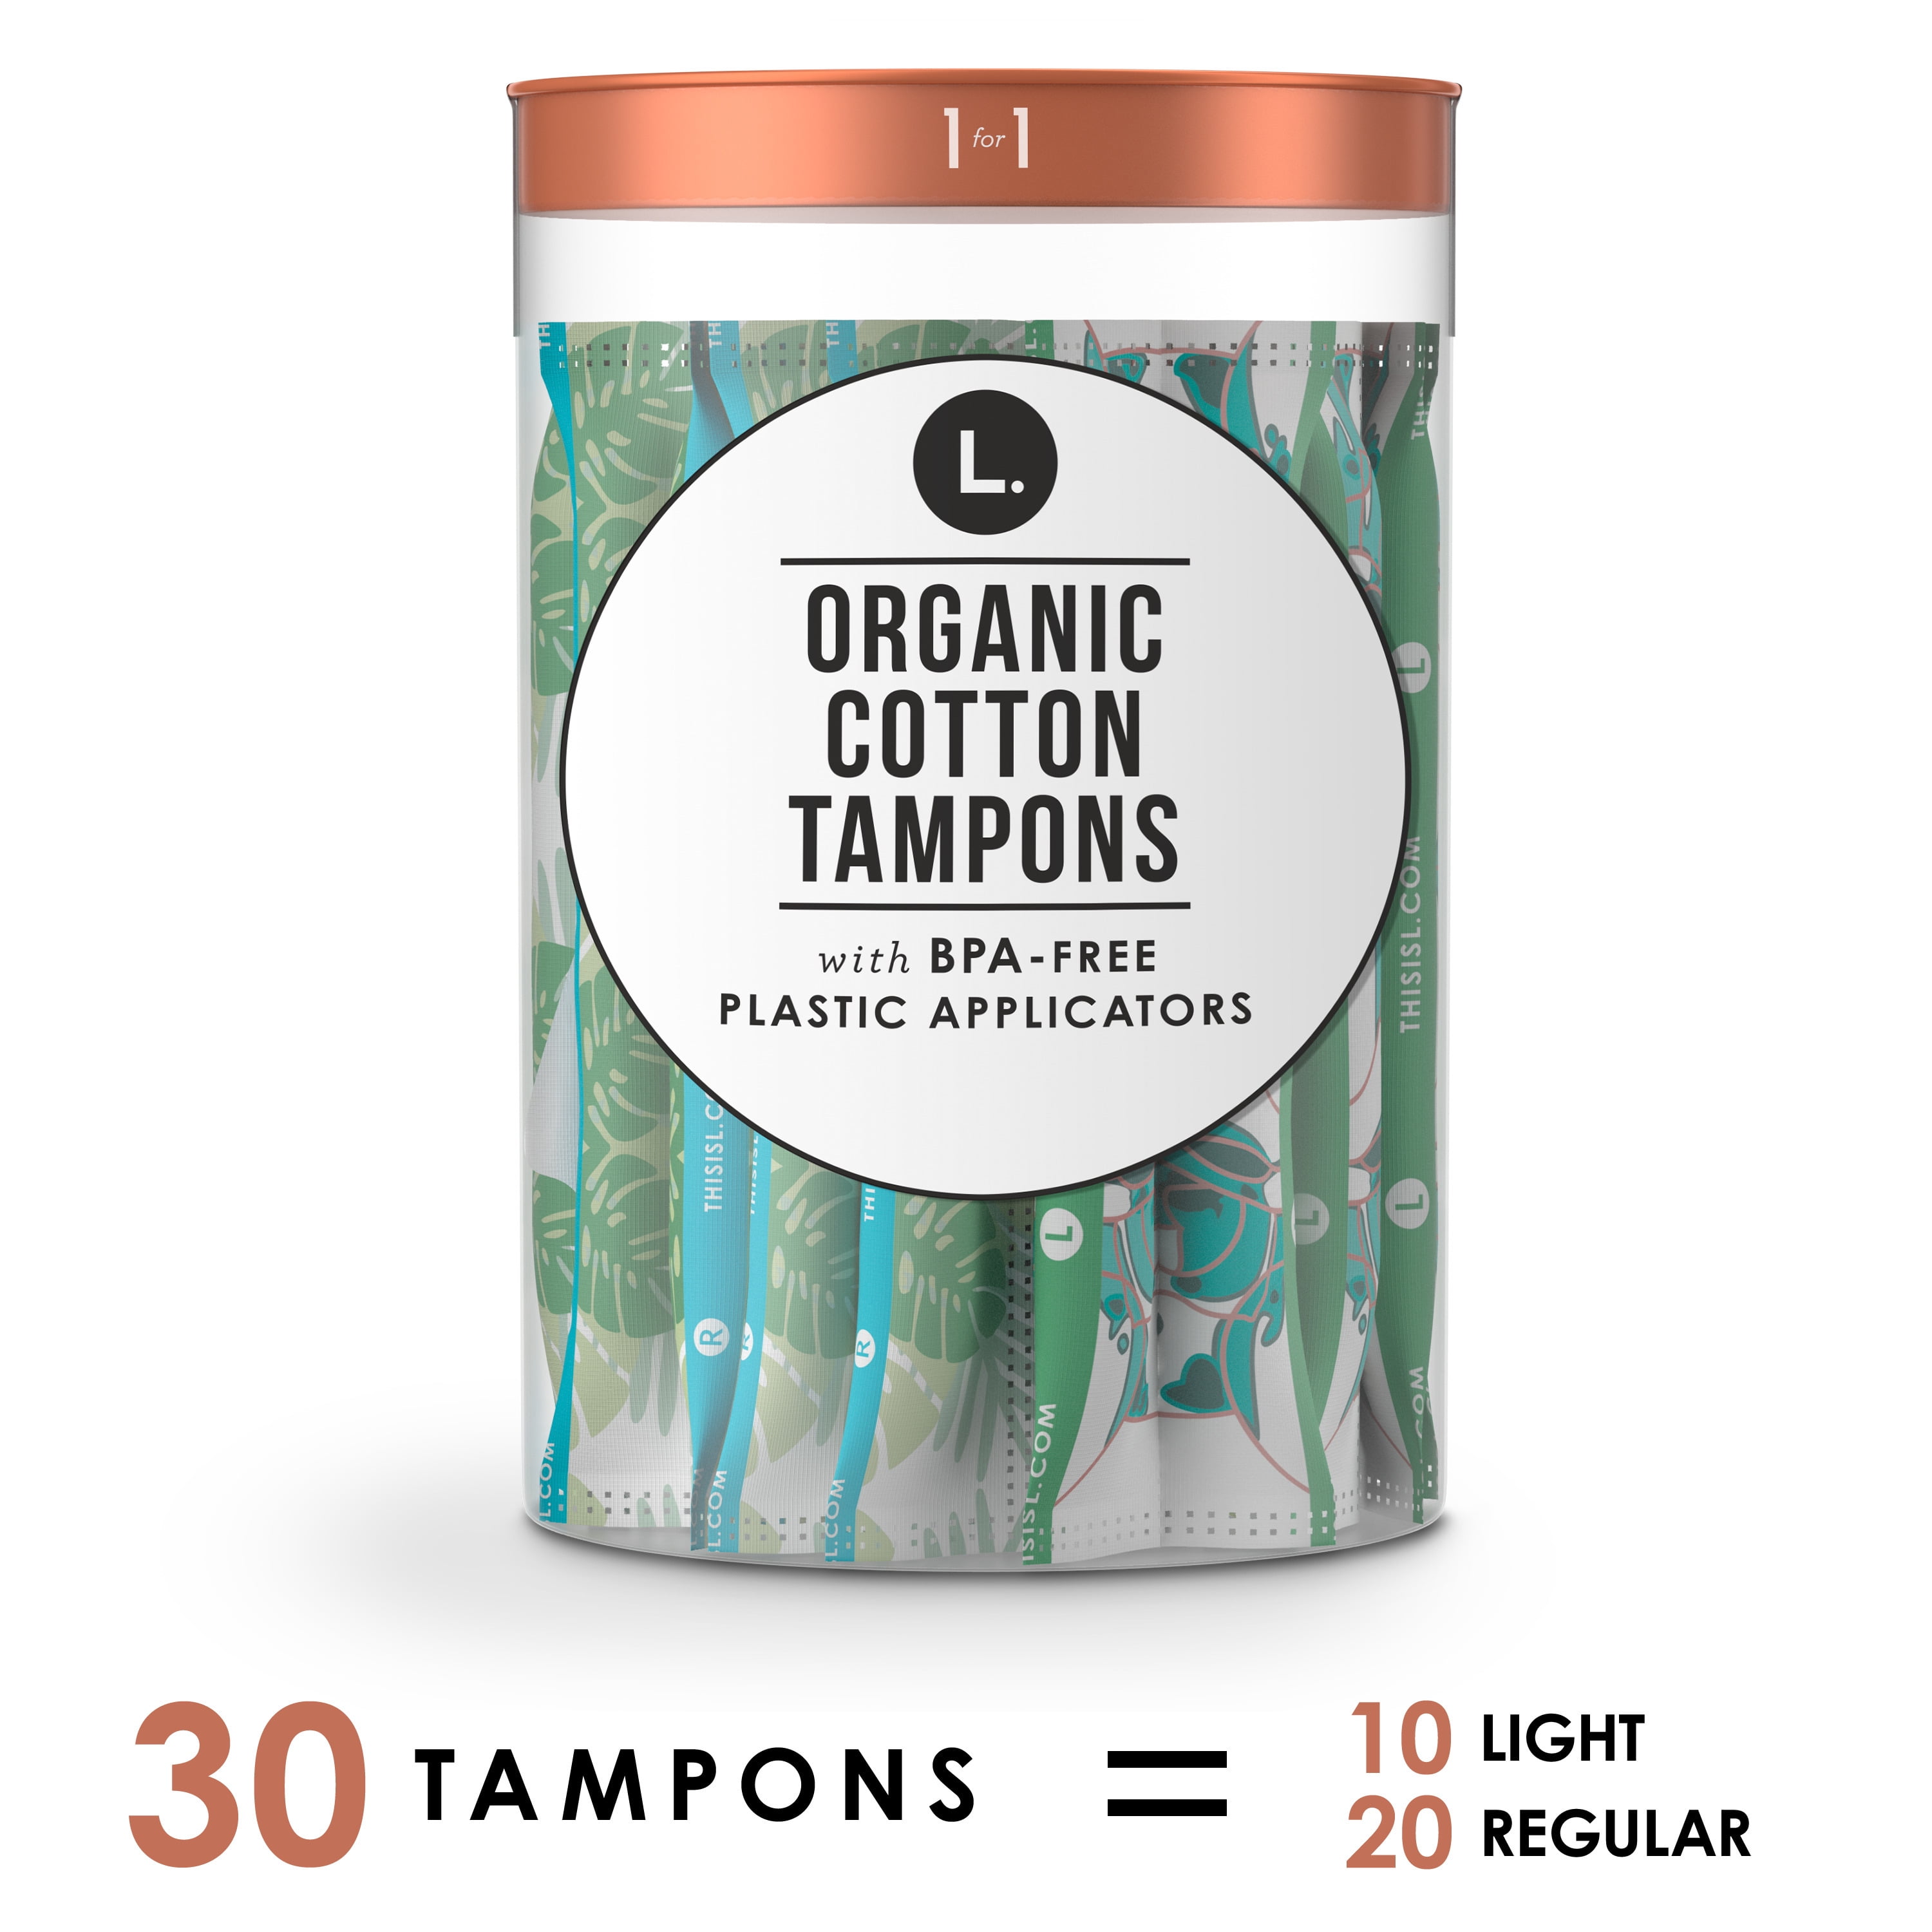 L. Organic Cotton Tampons, Light/Regular Absorbency, Duo Ct Walmart.com